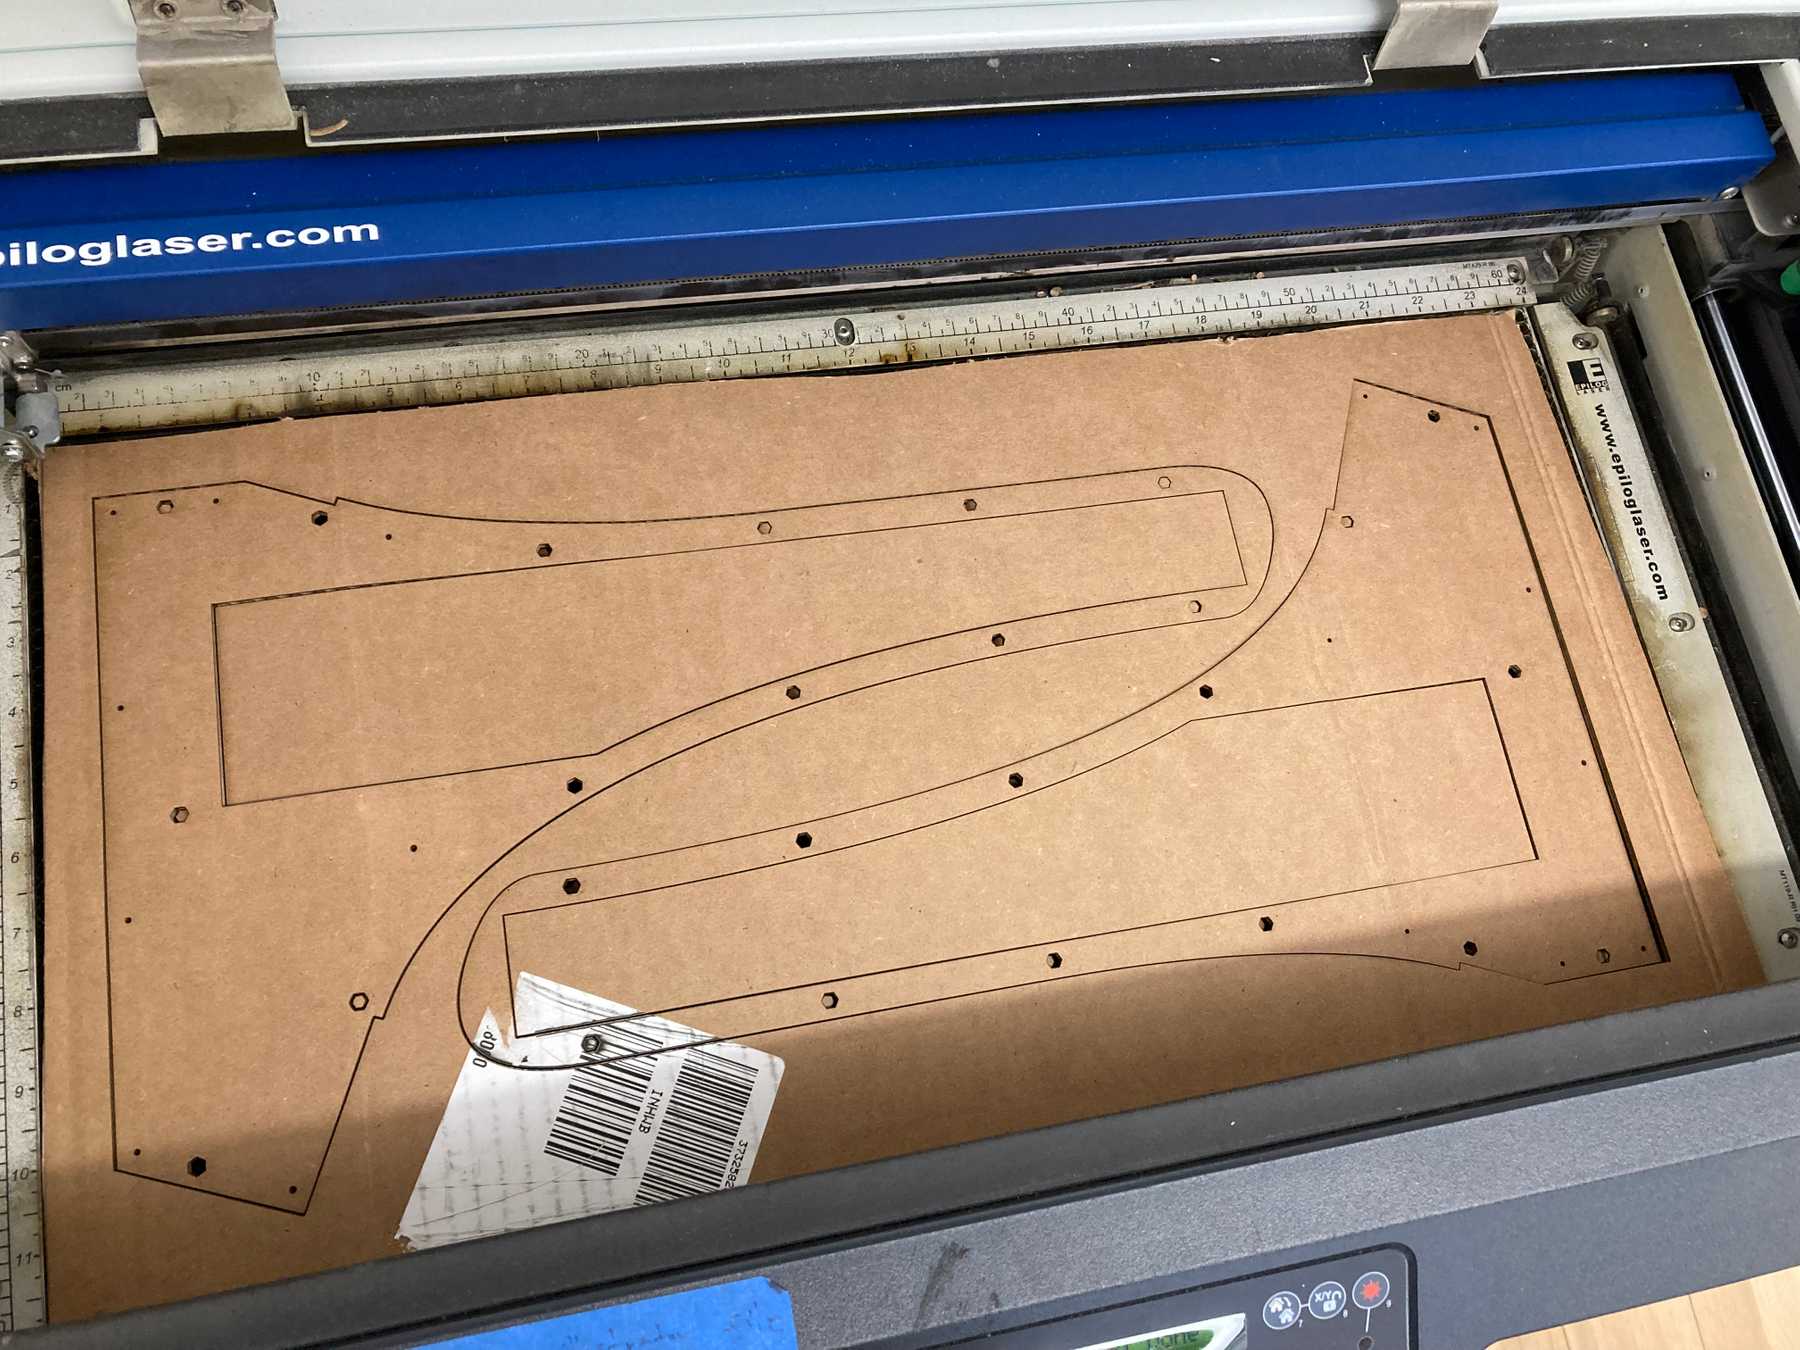 Laser-cutting the new design in cardboard